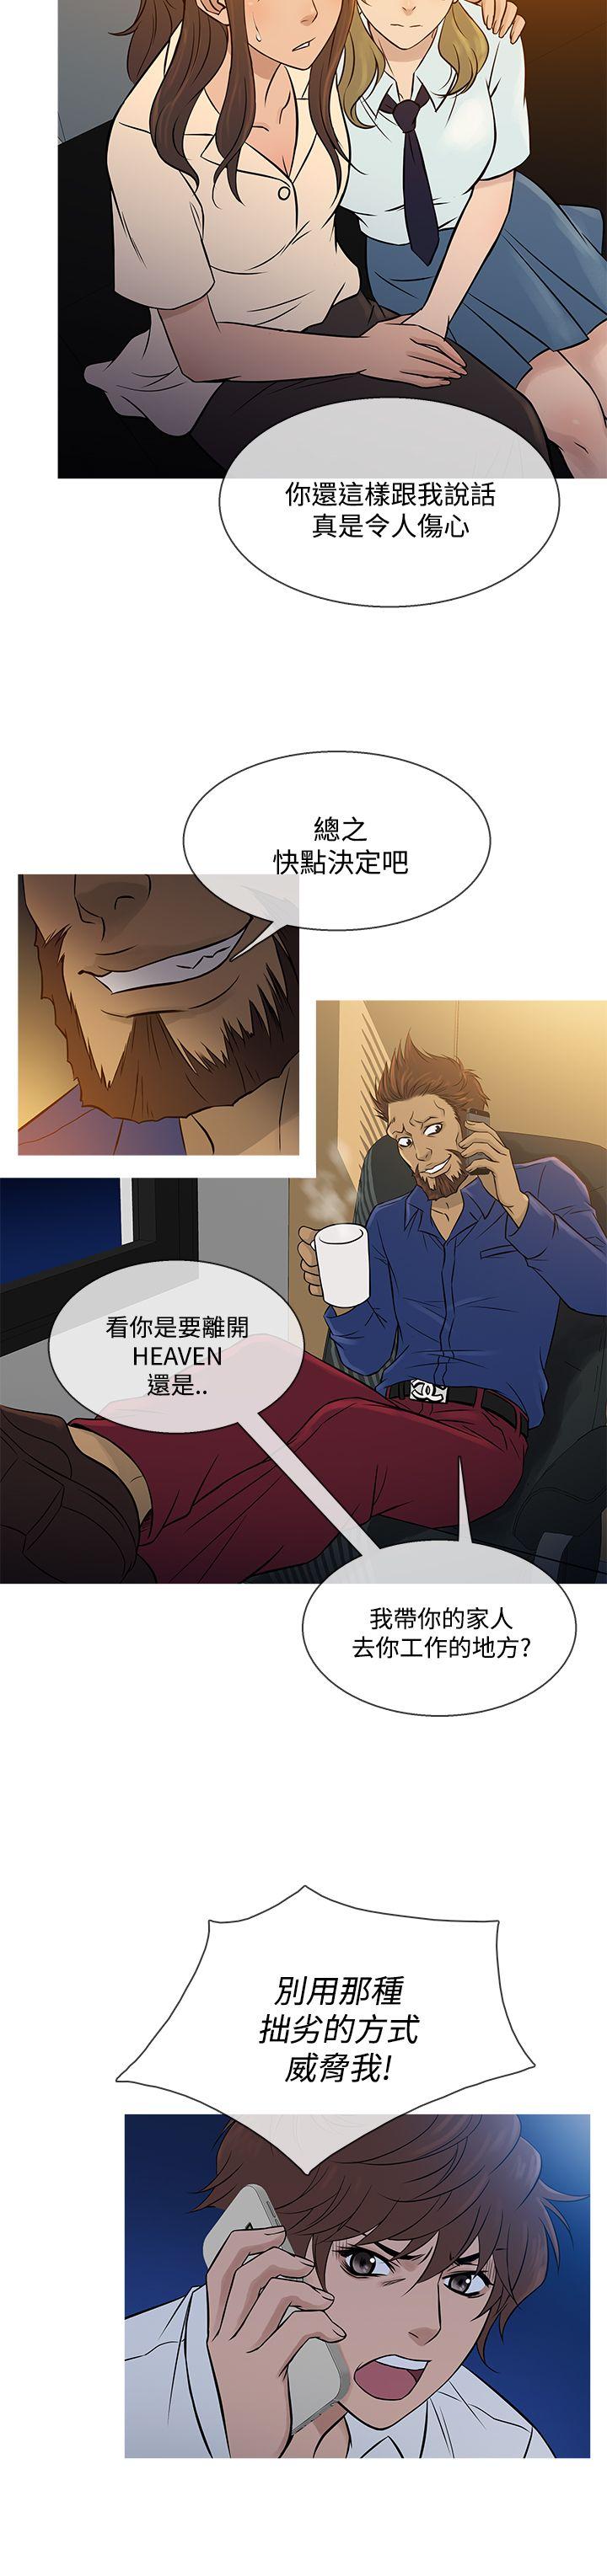 《Heaven》漫画 第63话